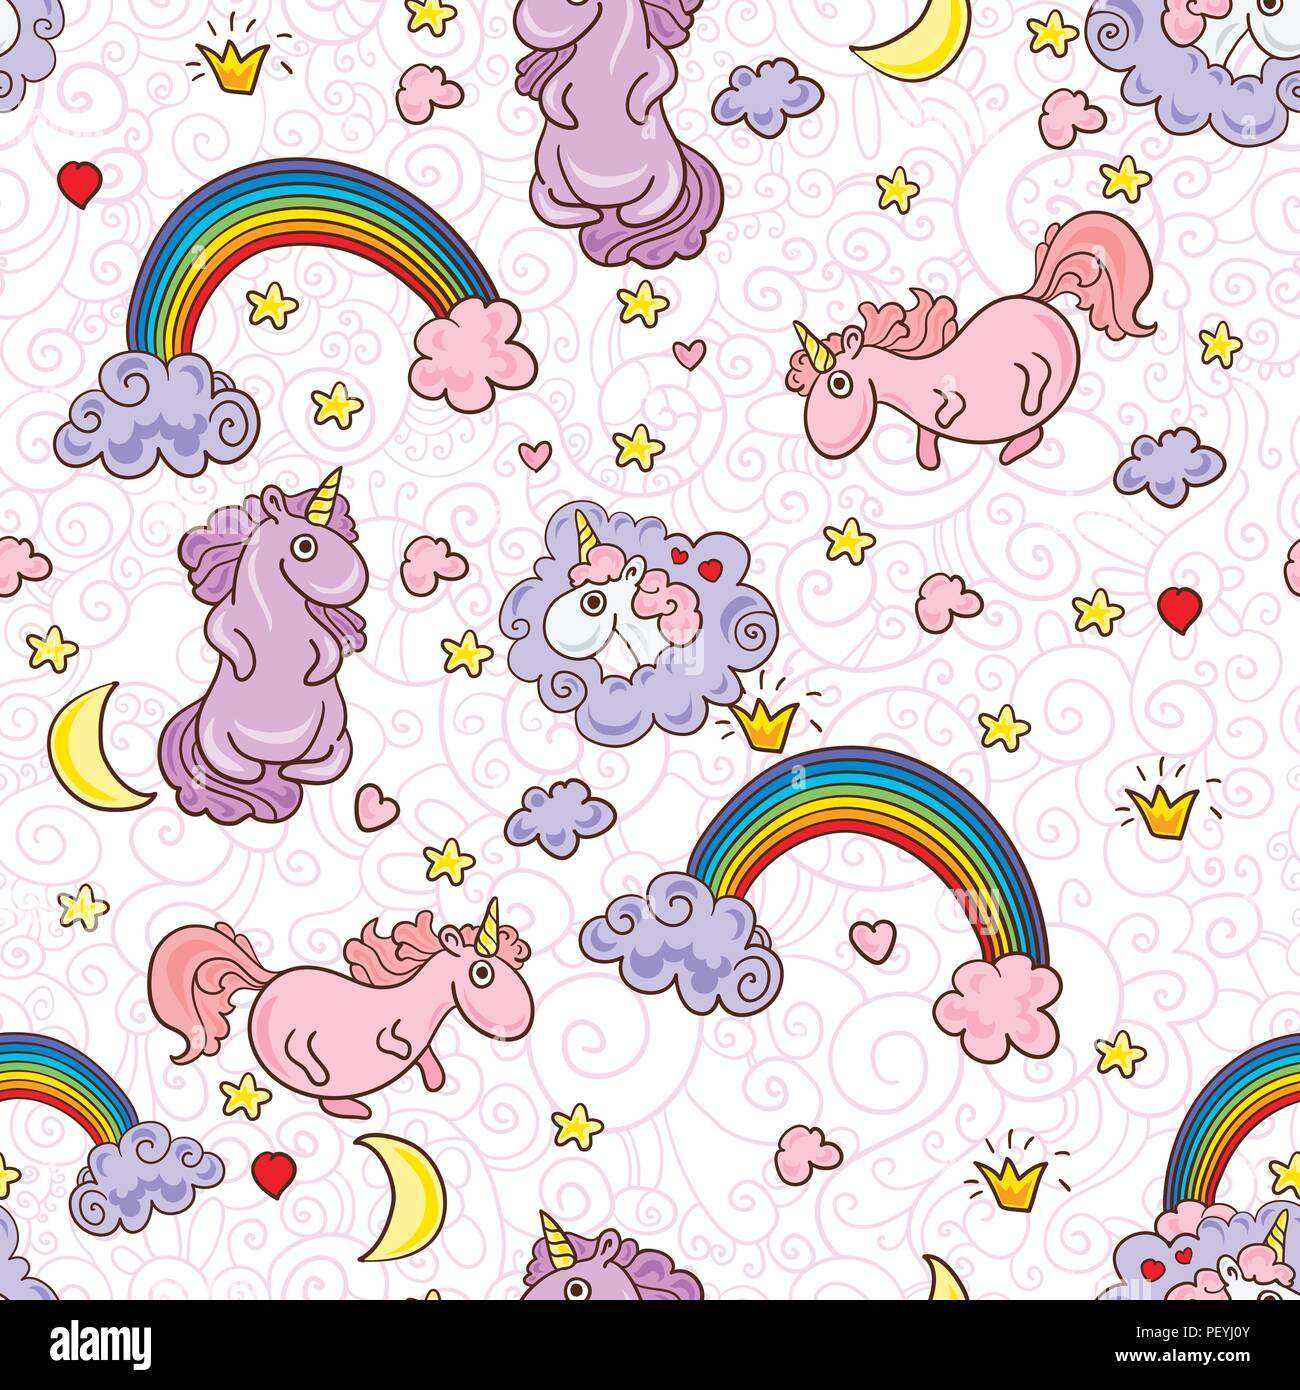 https://c8.alamy.com/comp/PEYJ0Y/cute-seamless-pattern-with-unicorns-vector-illustration-baby-background-PEYJ0Y.jpg